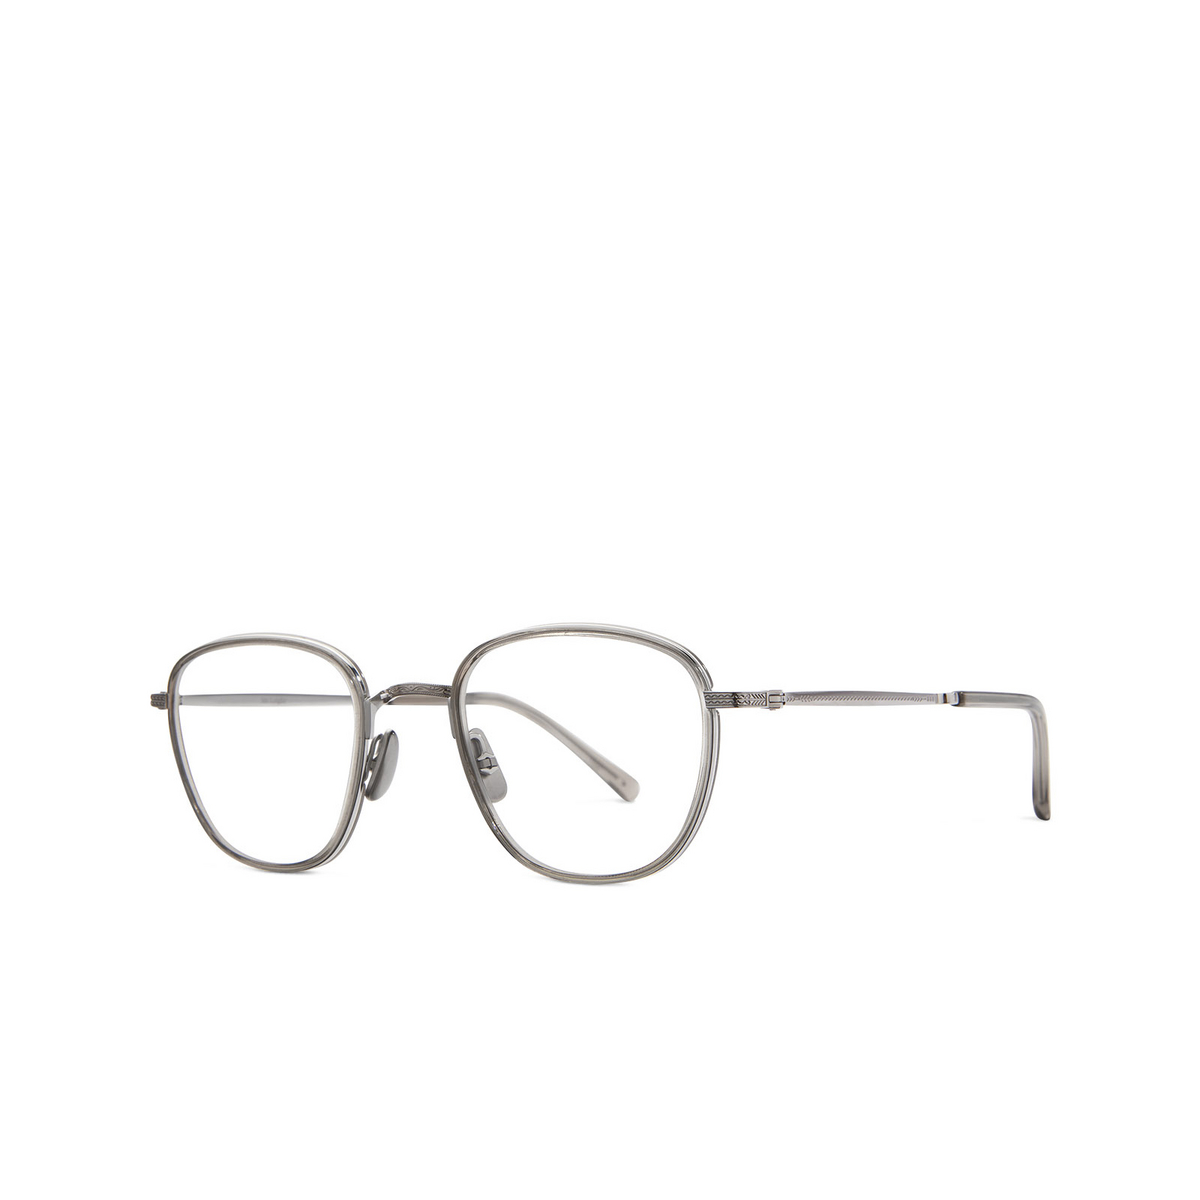 Mr. Leight GRIFFITH II C Eyeglasses GRYCRY-PLT Grey Crystal-Platinum - three-quarters view